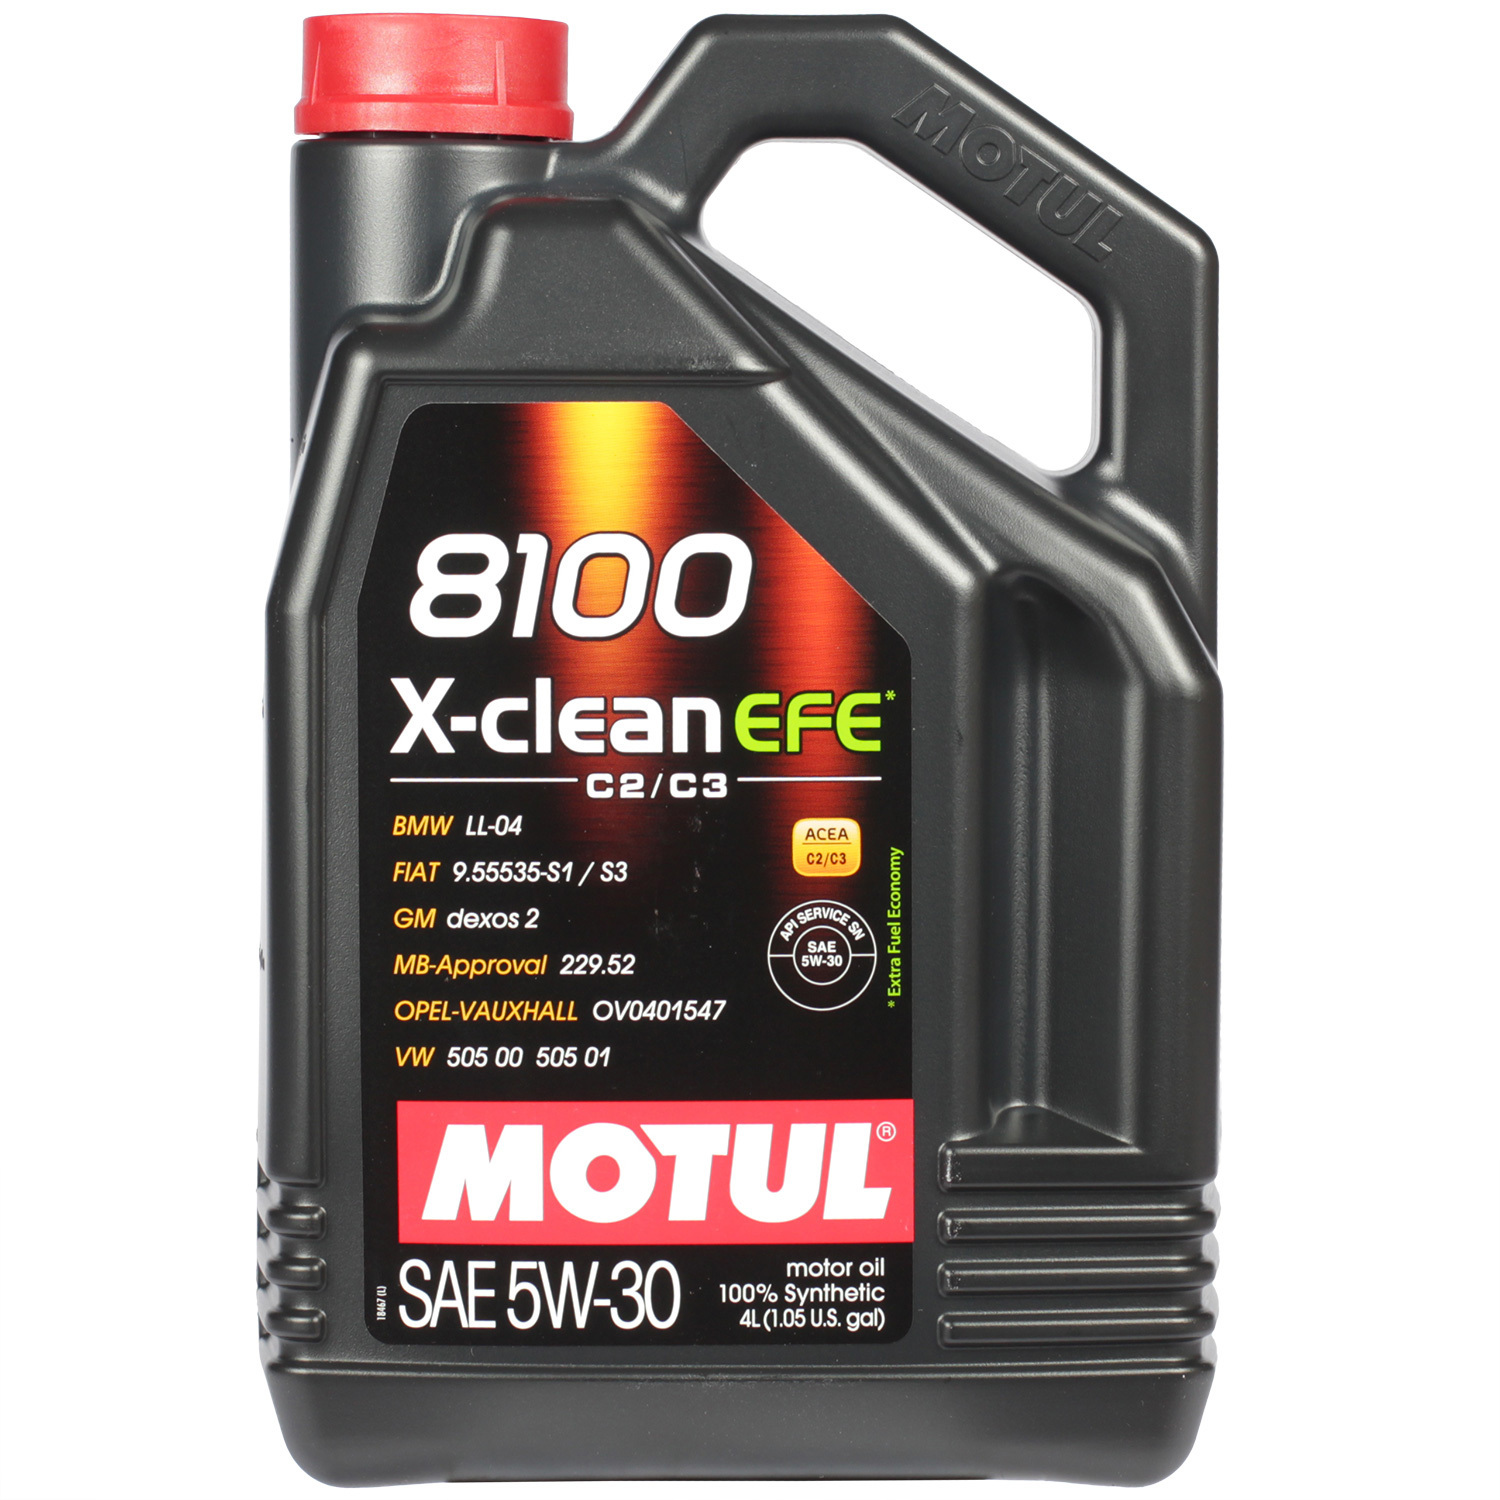 Моторное масло Motul 8100 Eco-clean EFE 5W-30, 4 л - фото 1